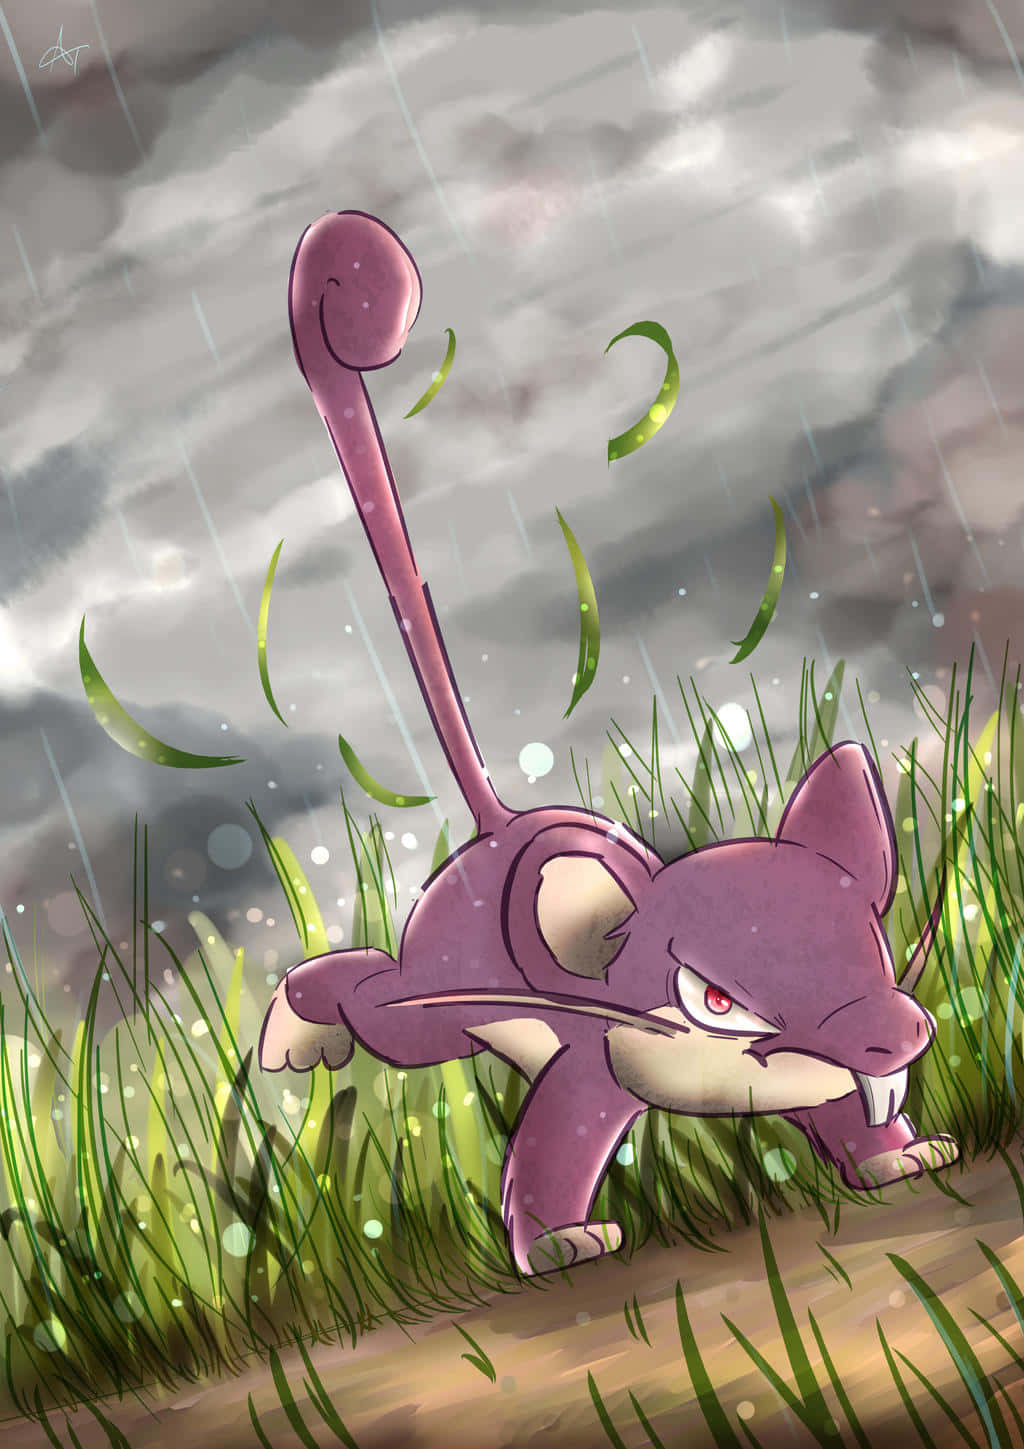 Pokémon Rattata Running In A Green Grass Field And Gray Sky Wallpaper